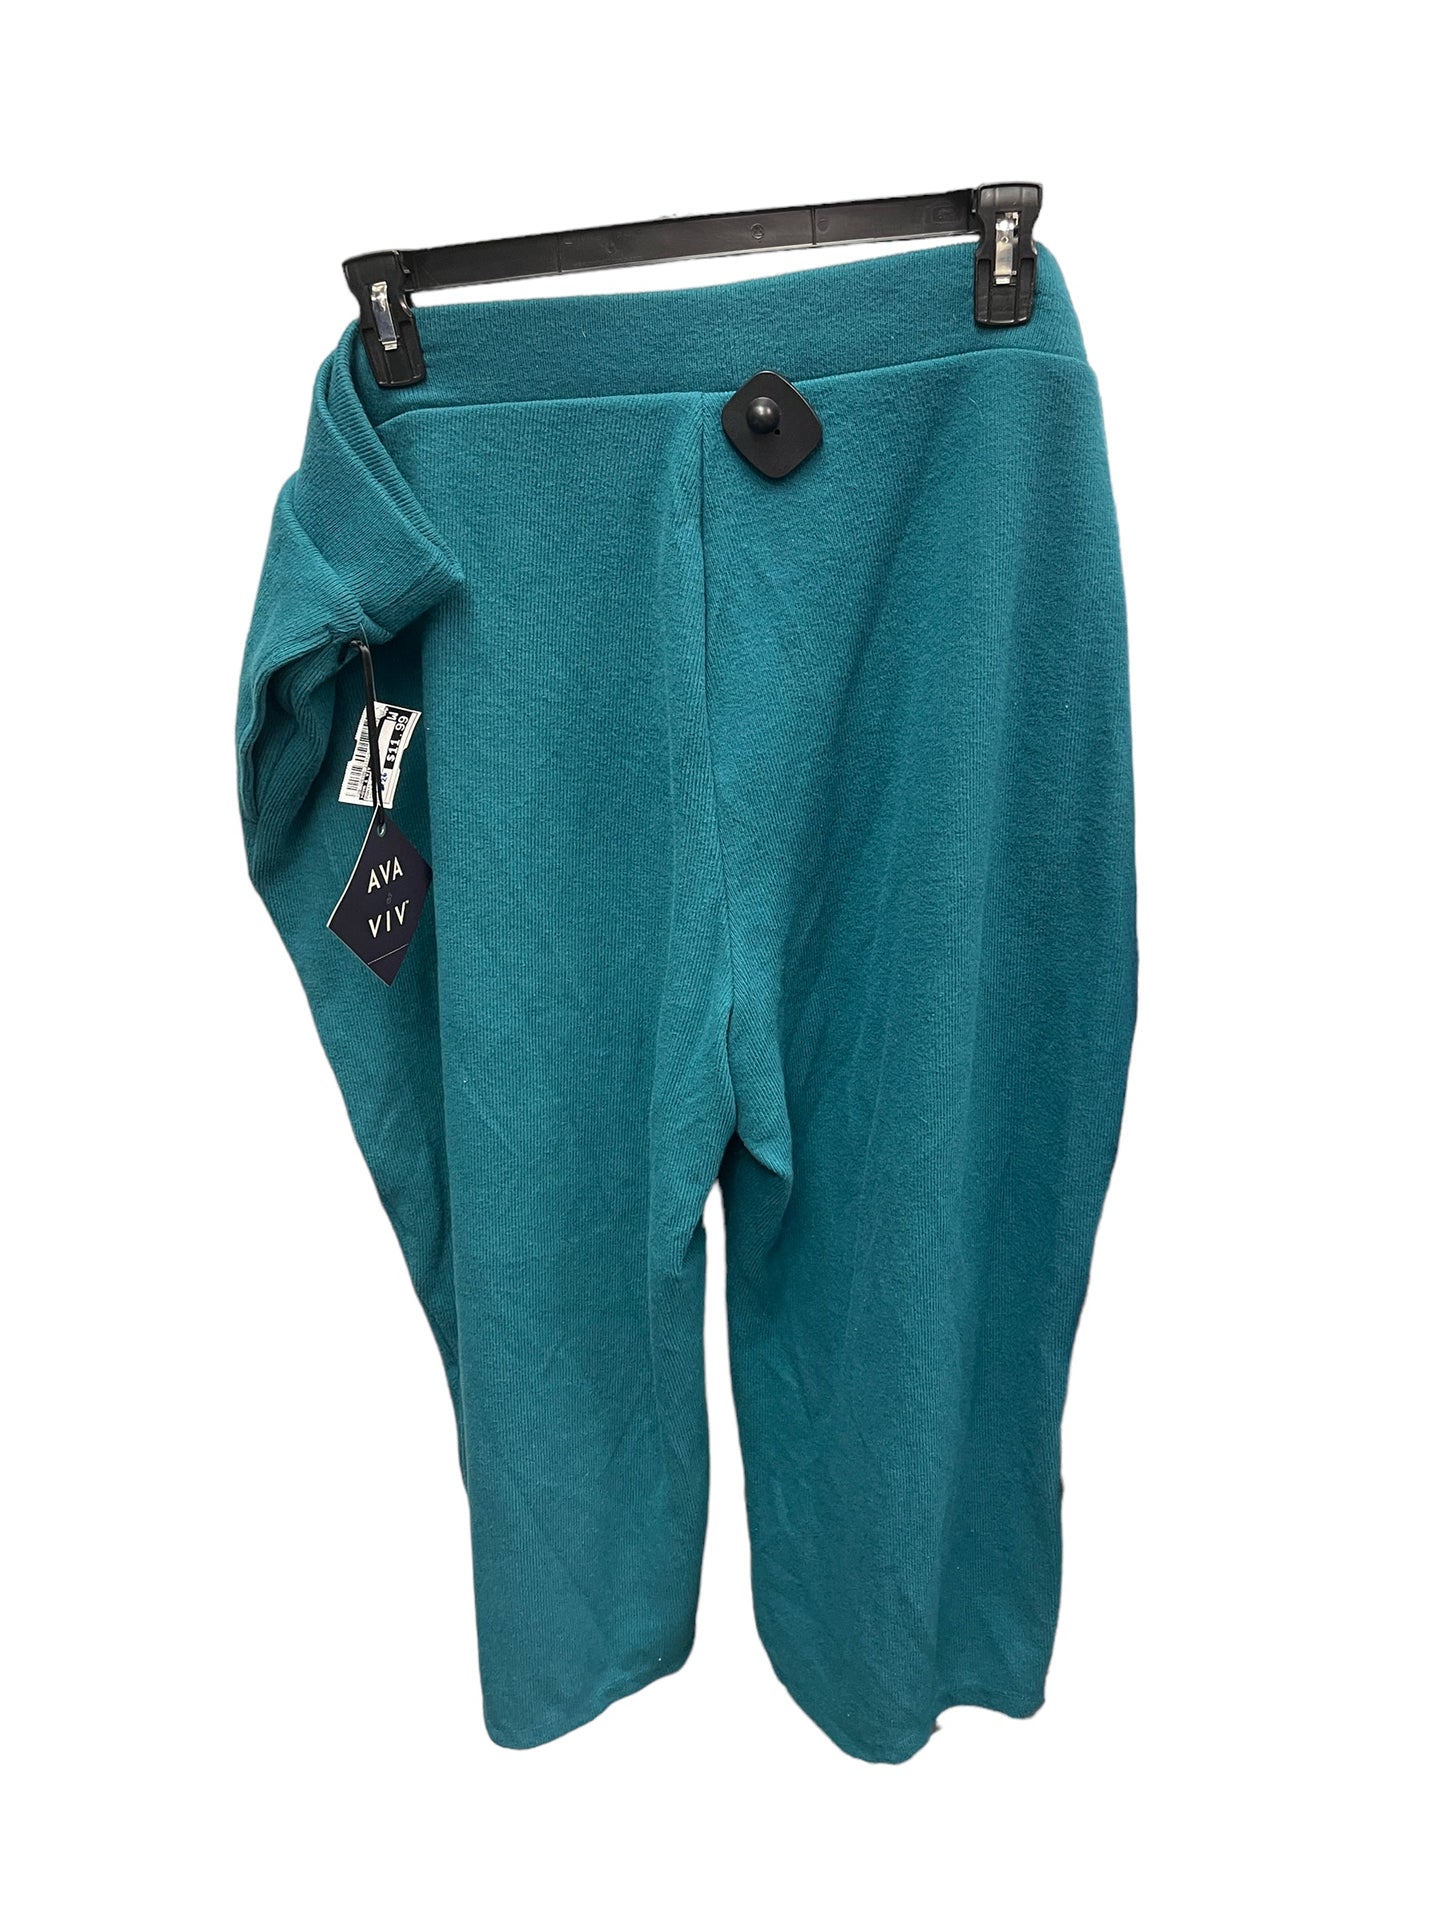 Pants Sweatpants By Ava & Viv  Size: 26